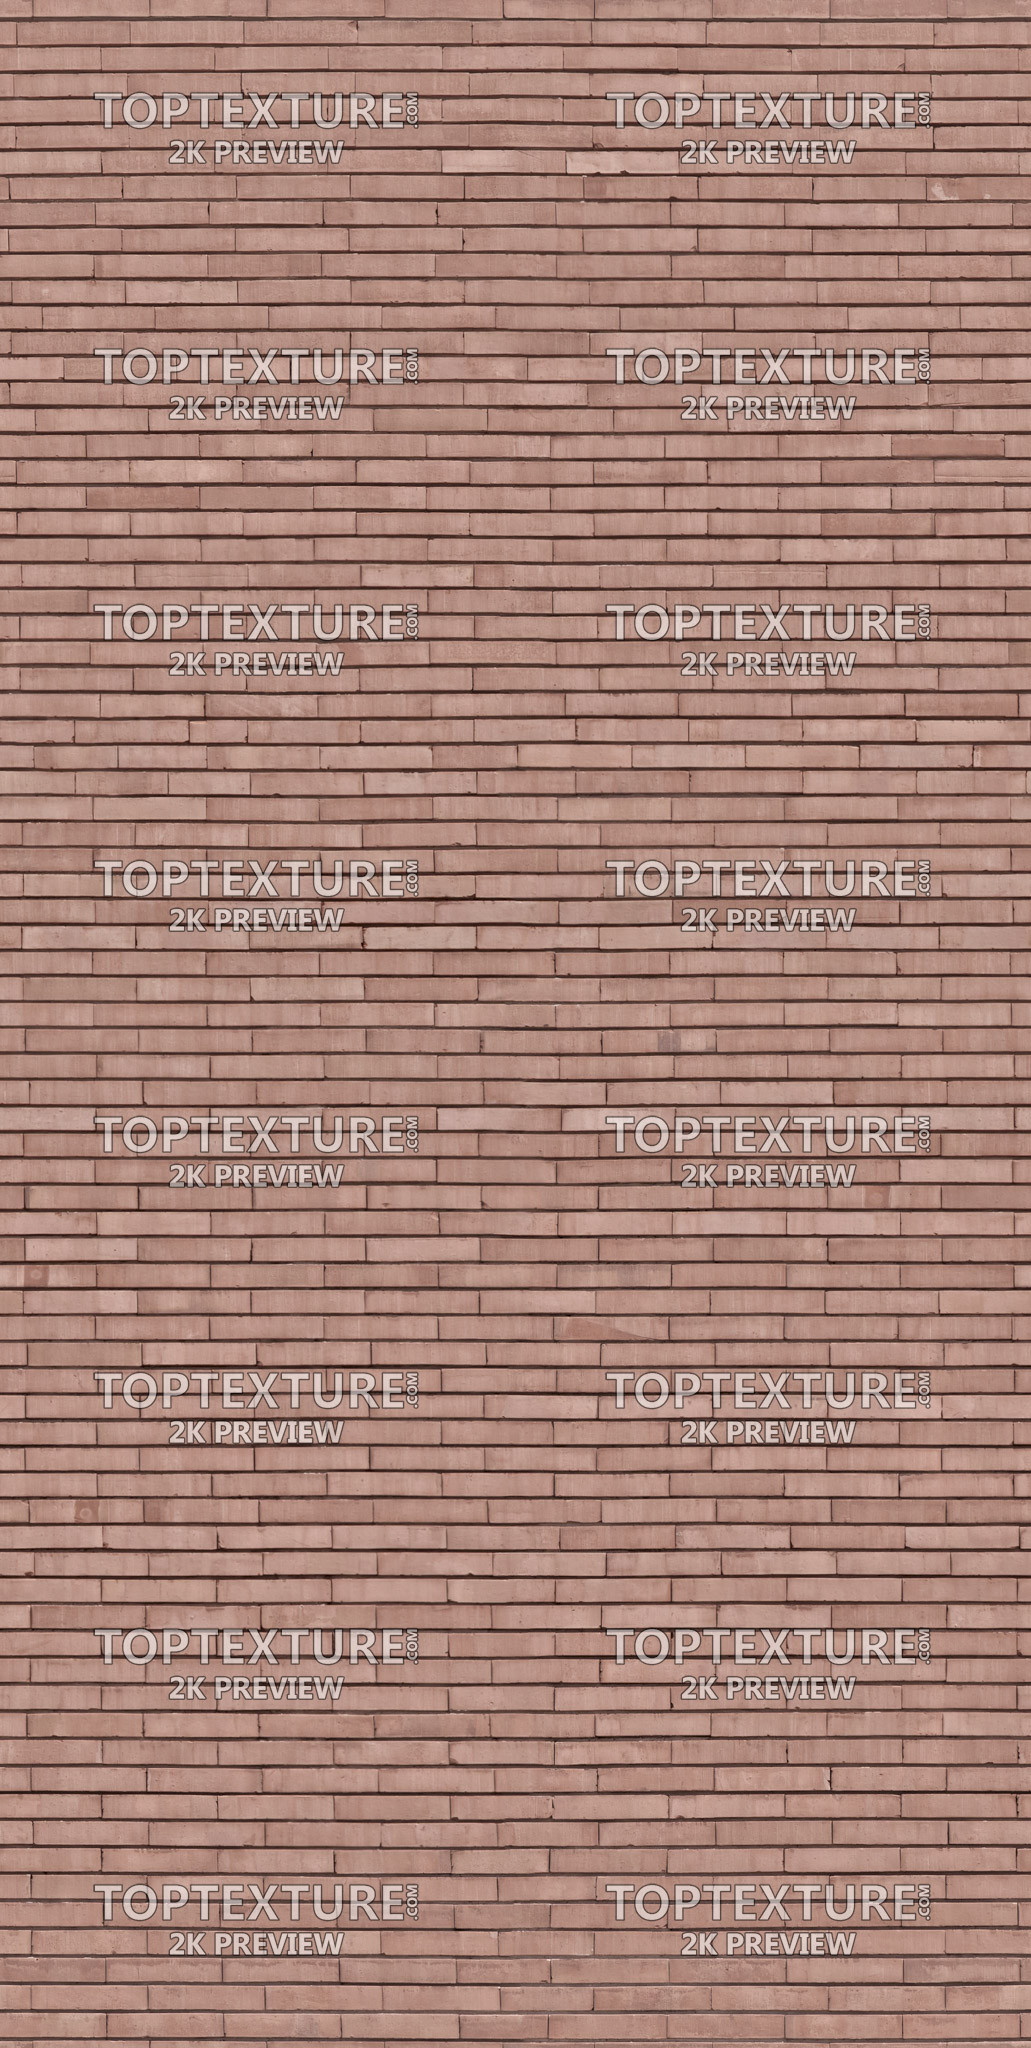 Clean Classical Wall Bricks - 2K preview